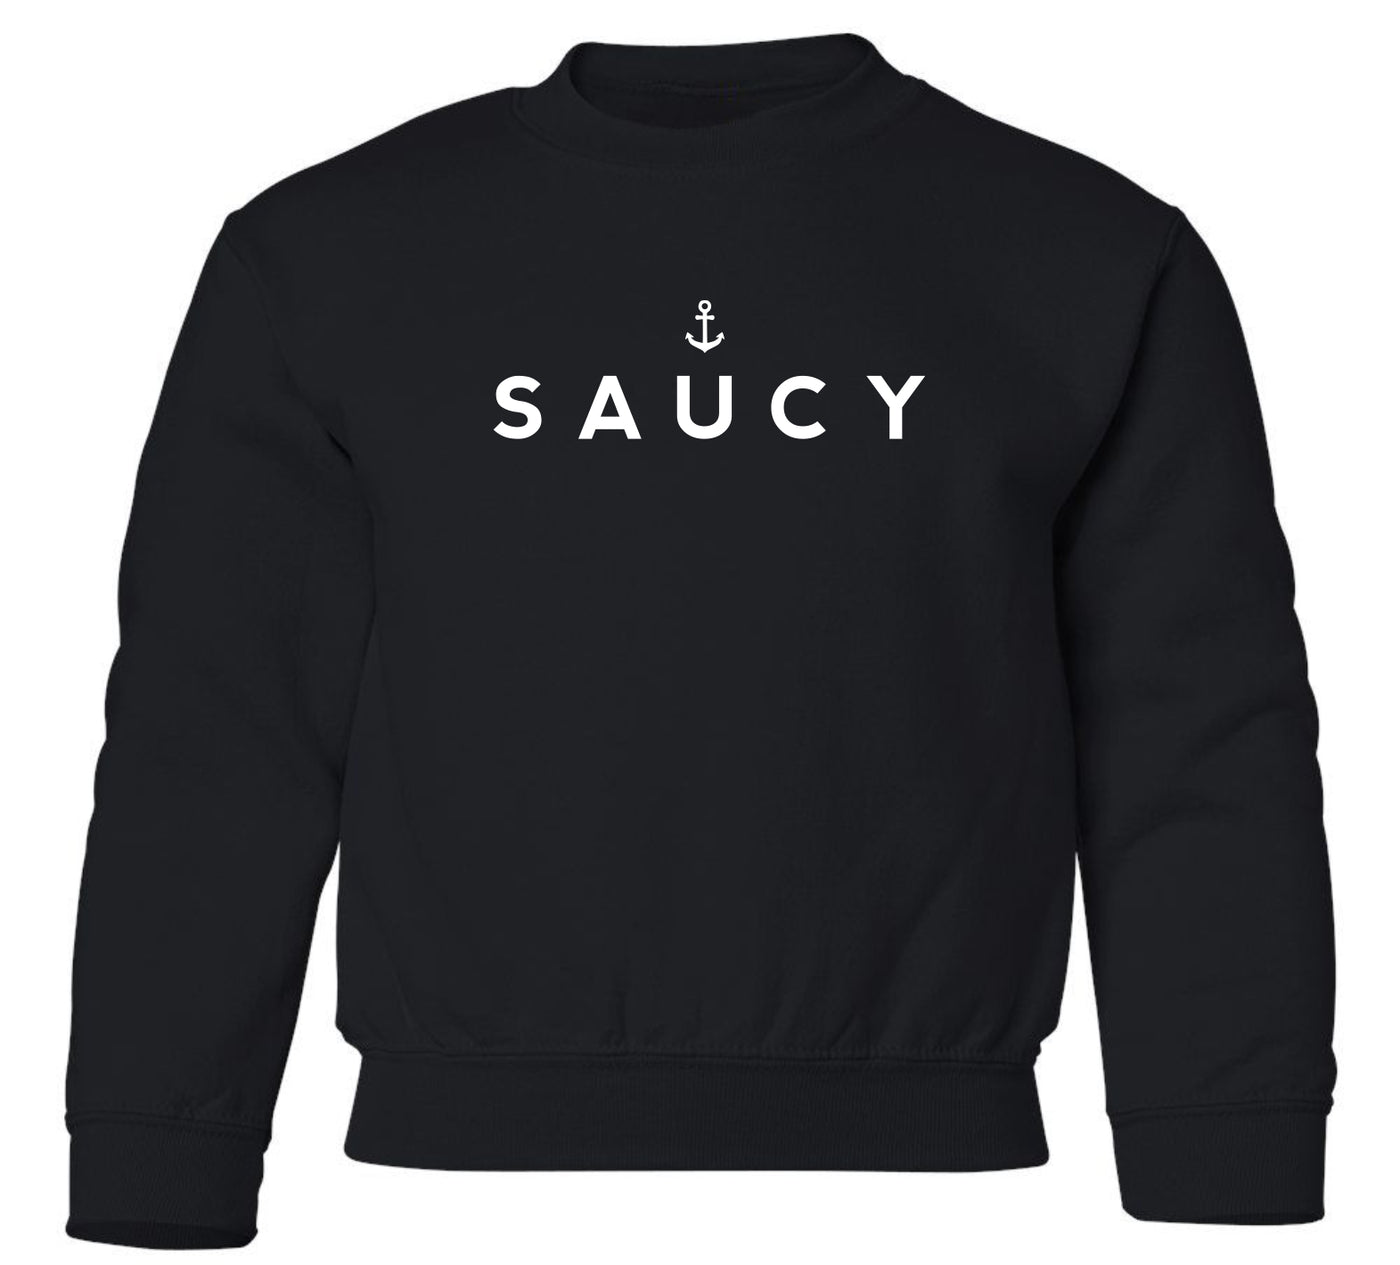 "Saucy" Toddler/Youth Crewneck Sweatshirt